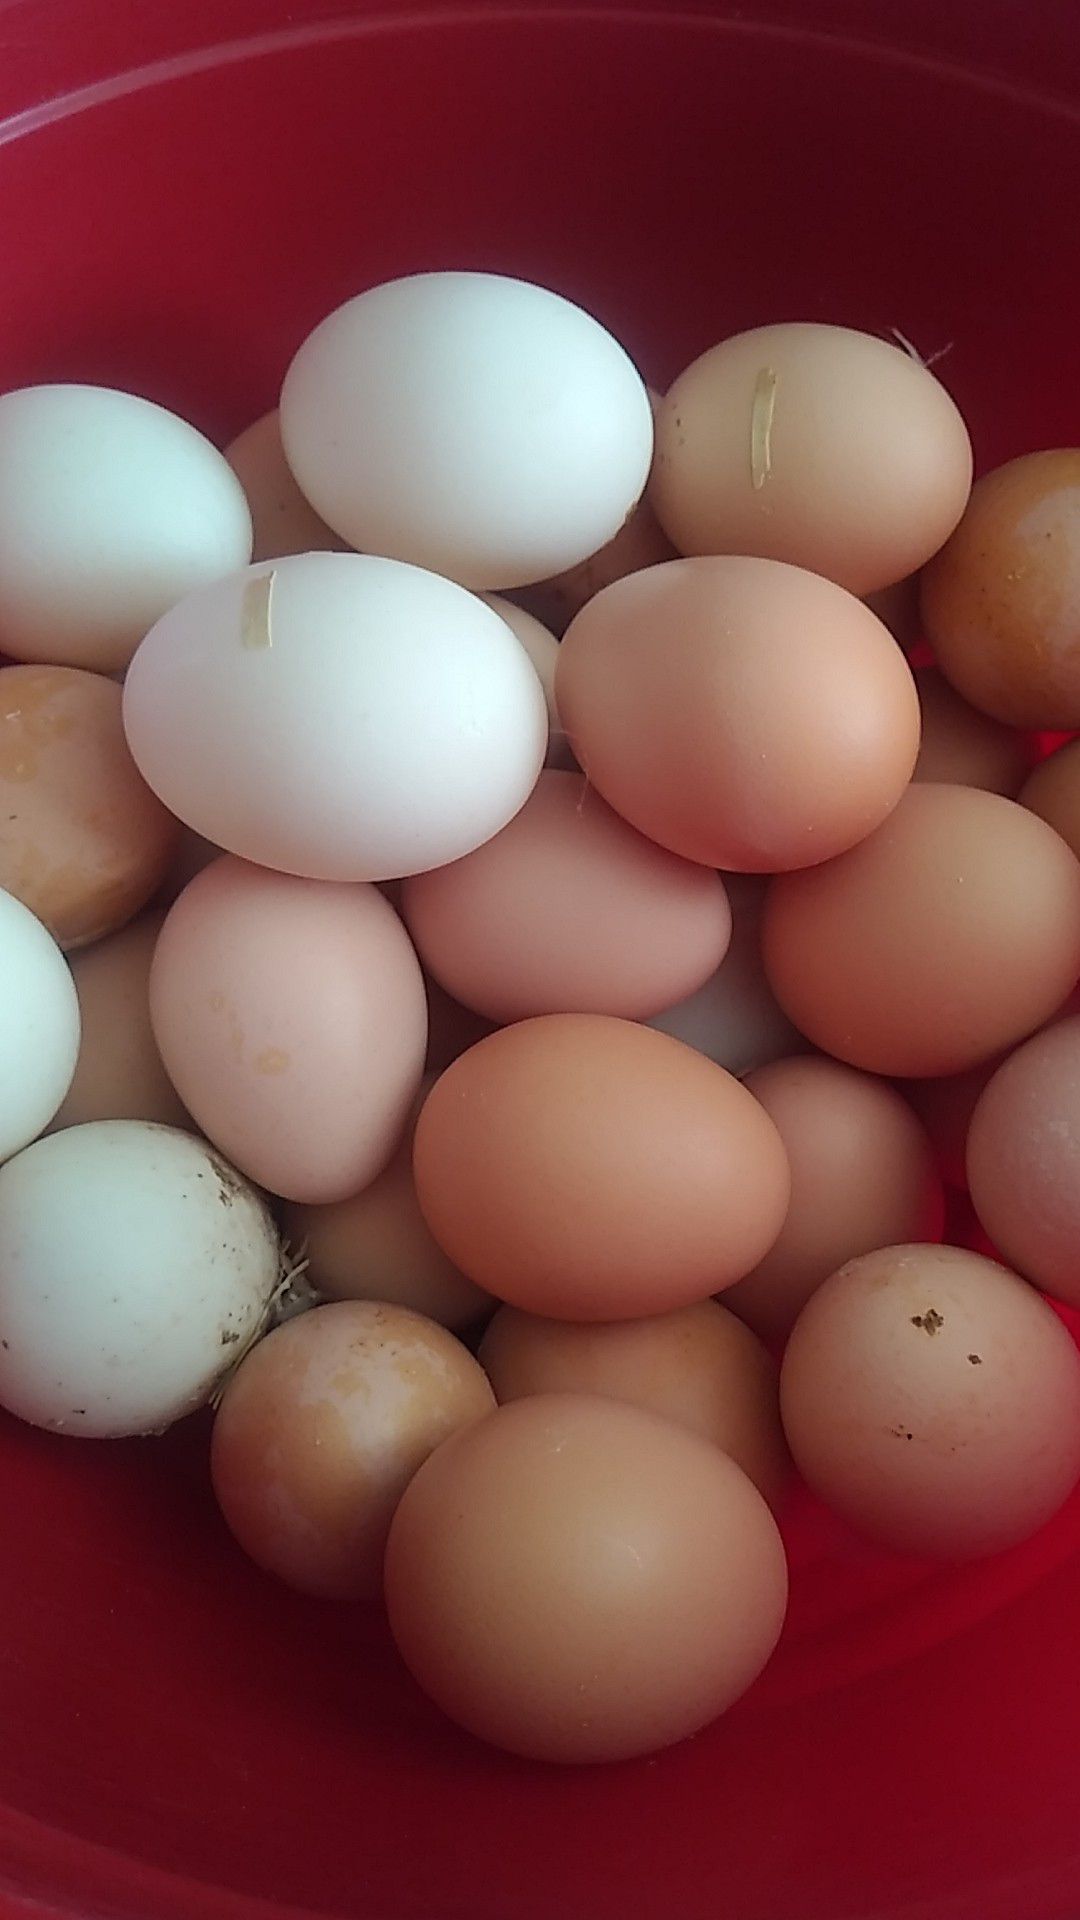 Duck and chicken eggs organics